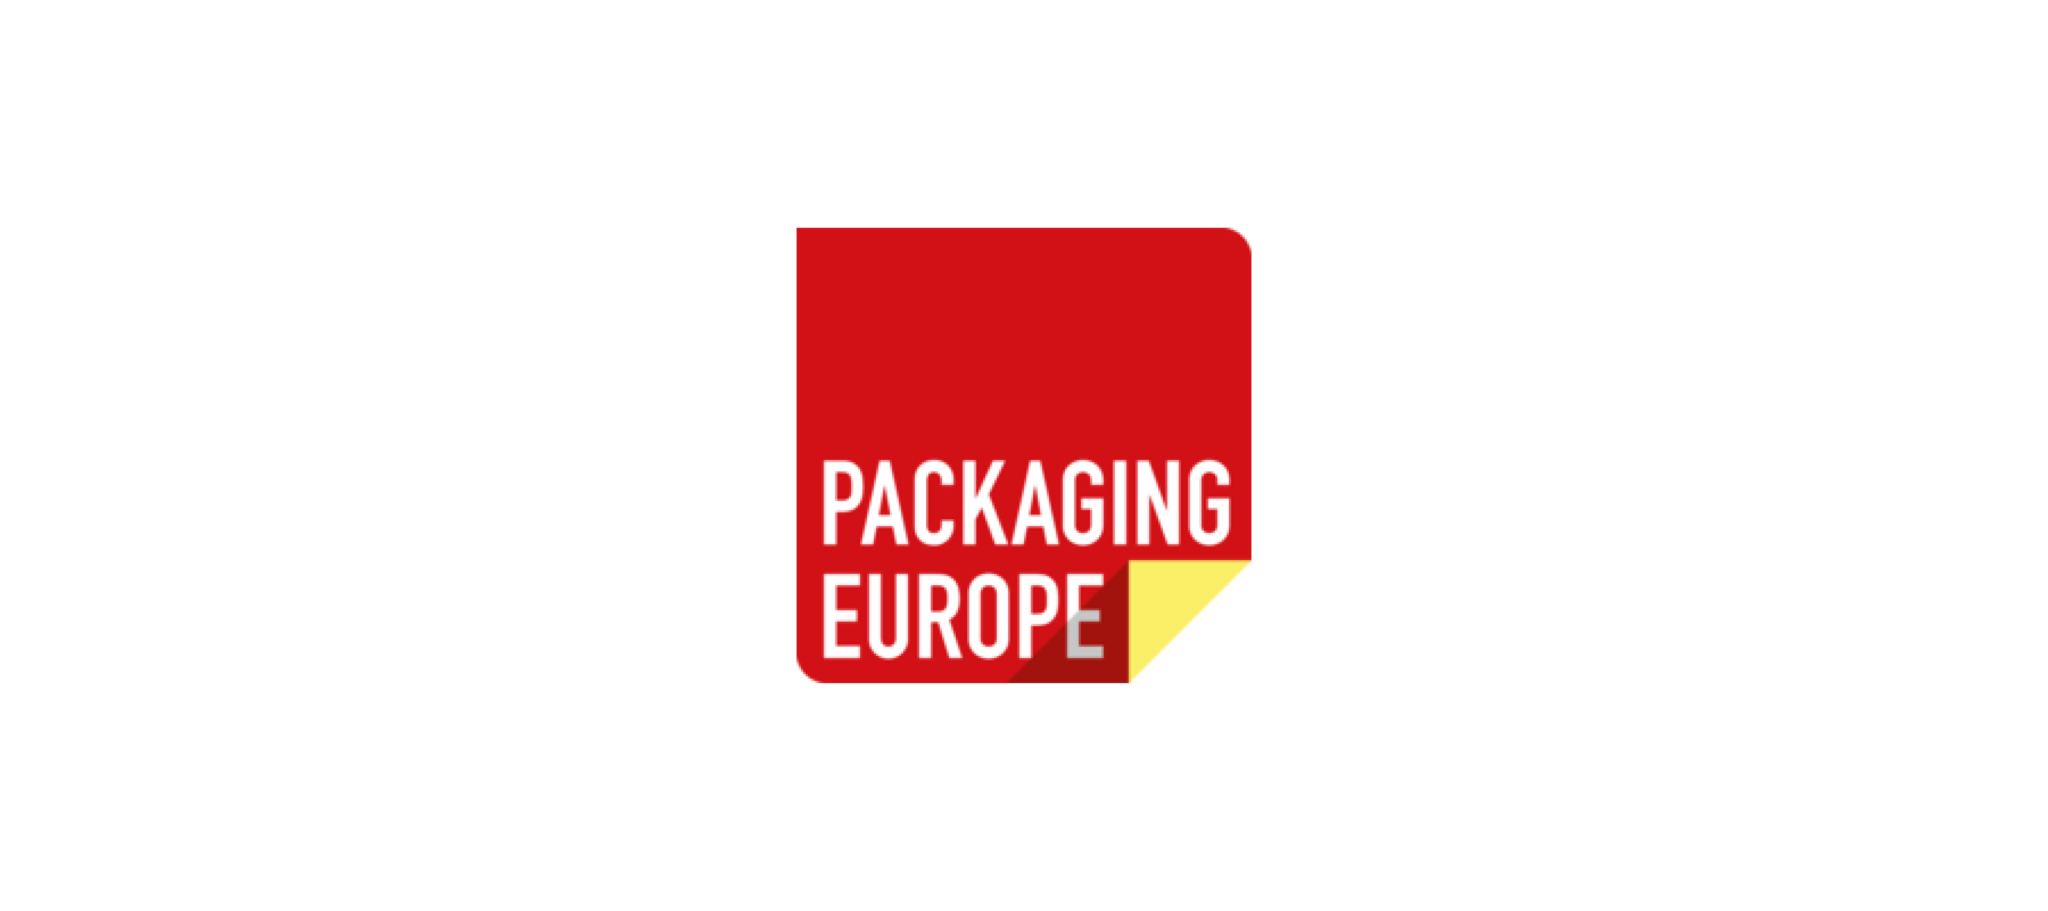 Packaging Europe Logo Article